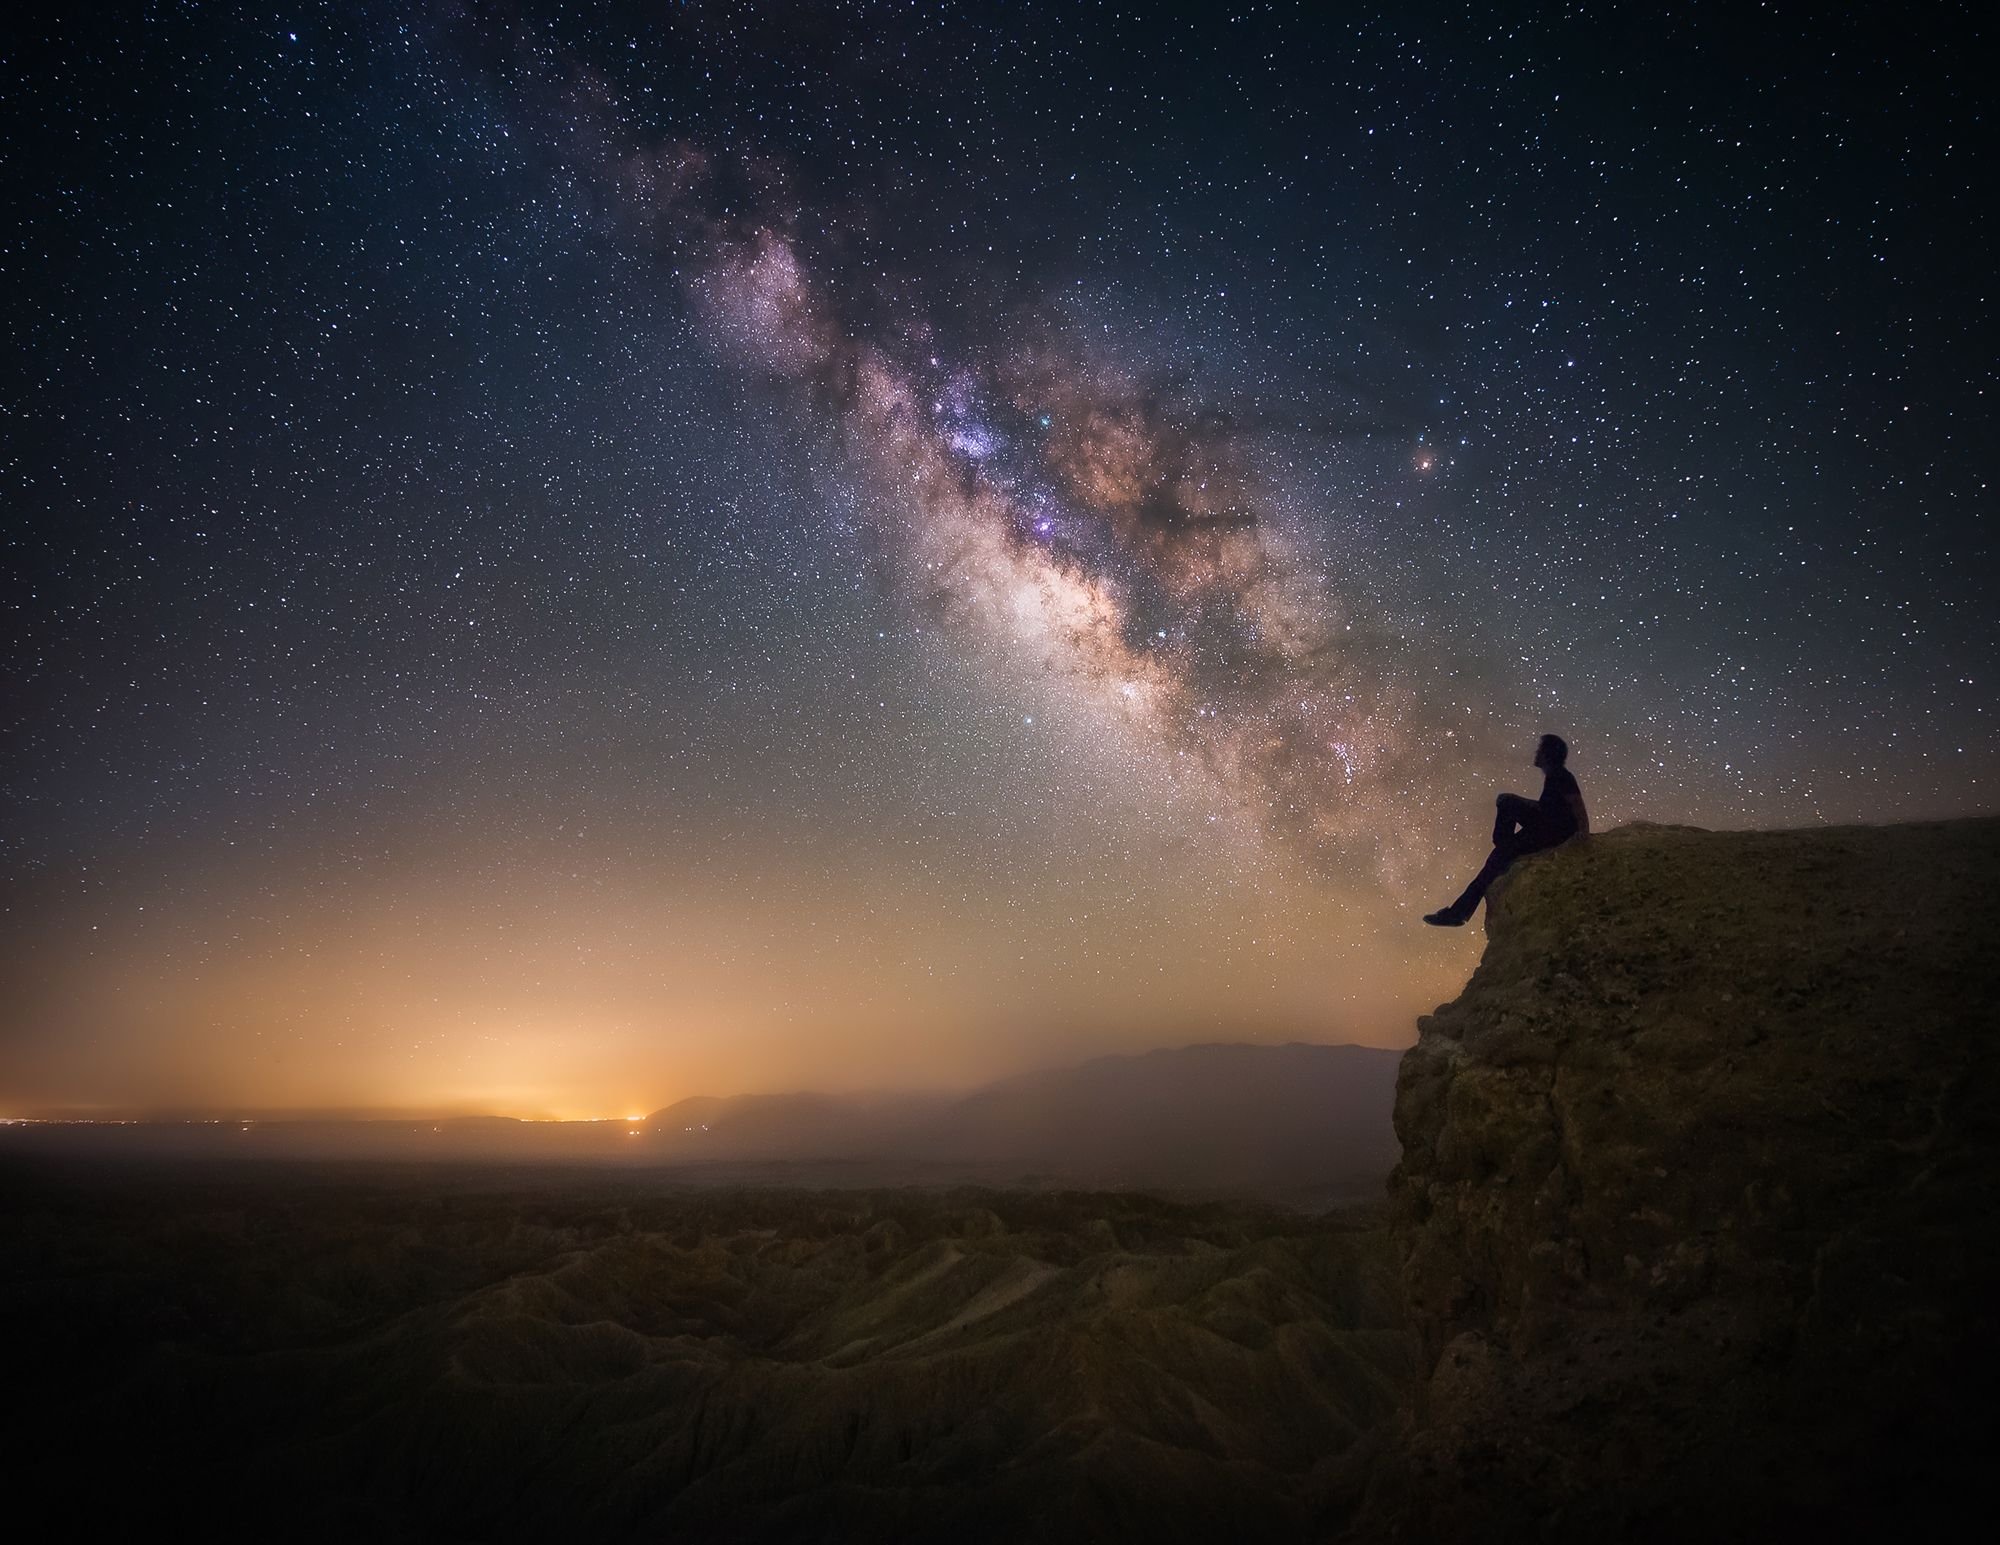 Путь среди звезд. Звездное небо и человек. Человек на фоне звездного неба. Ночное небо. Ночное небо со звездами.